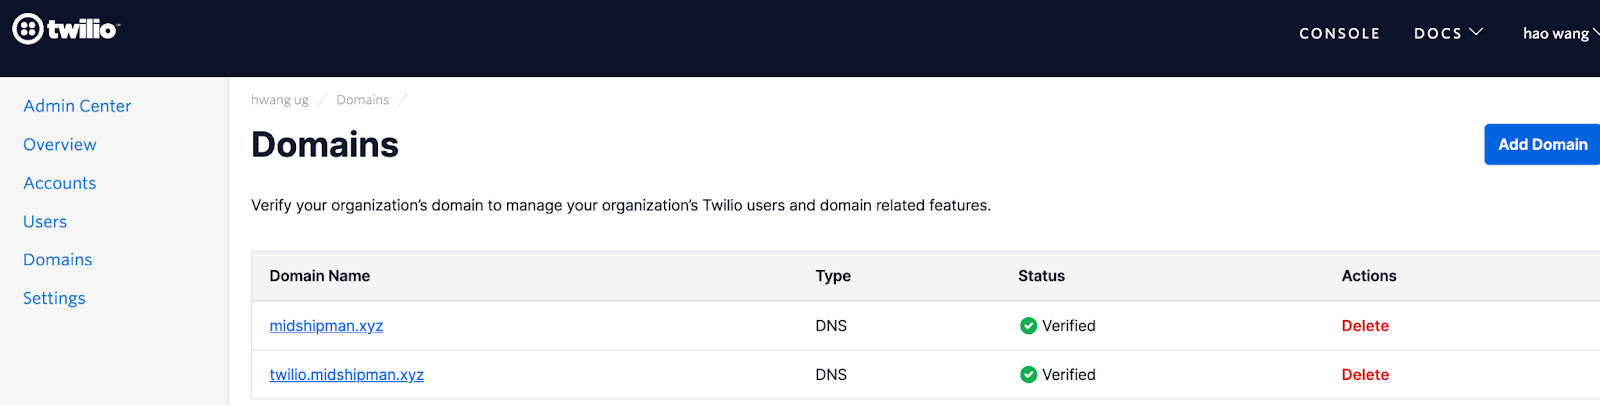 Verify domains inside the Twilio Console